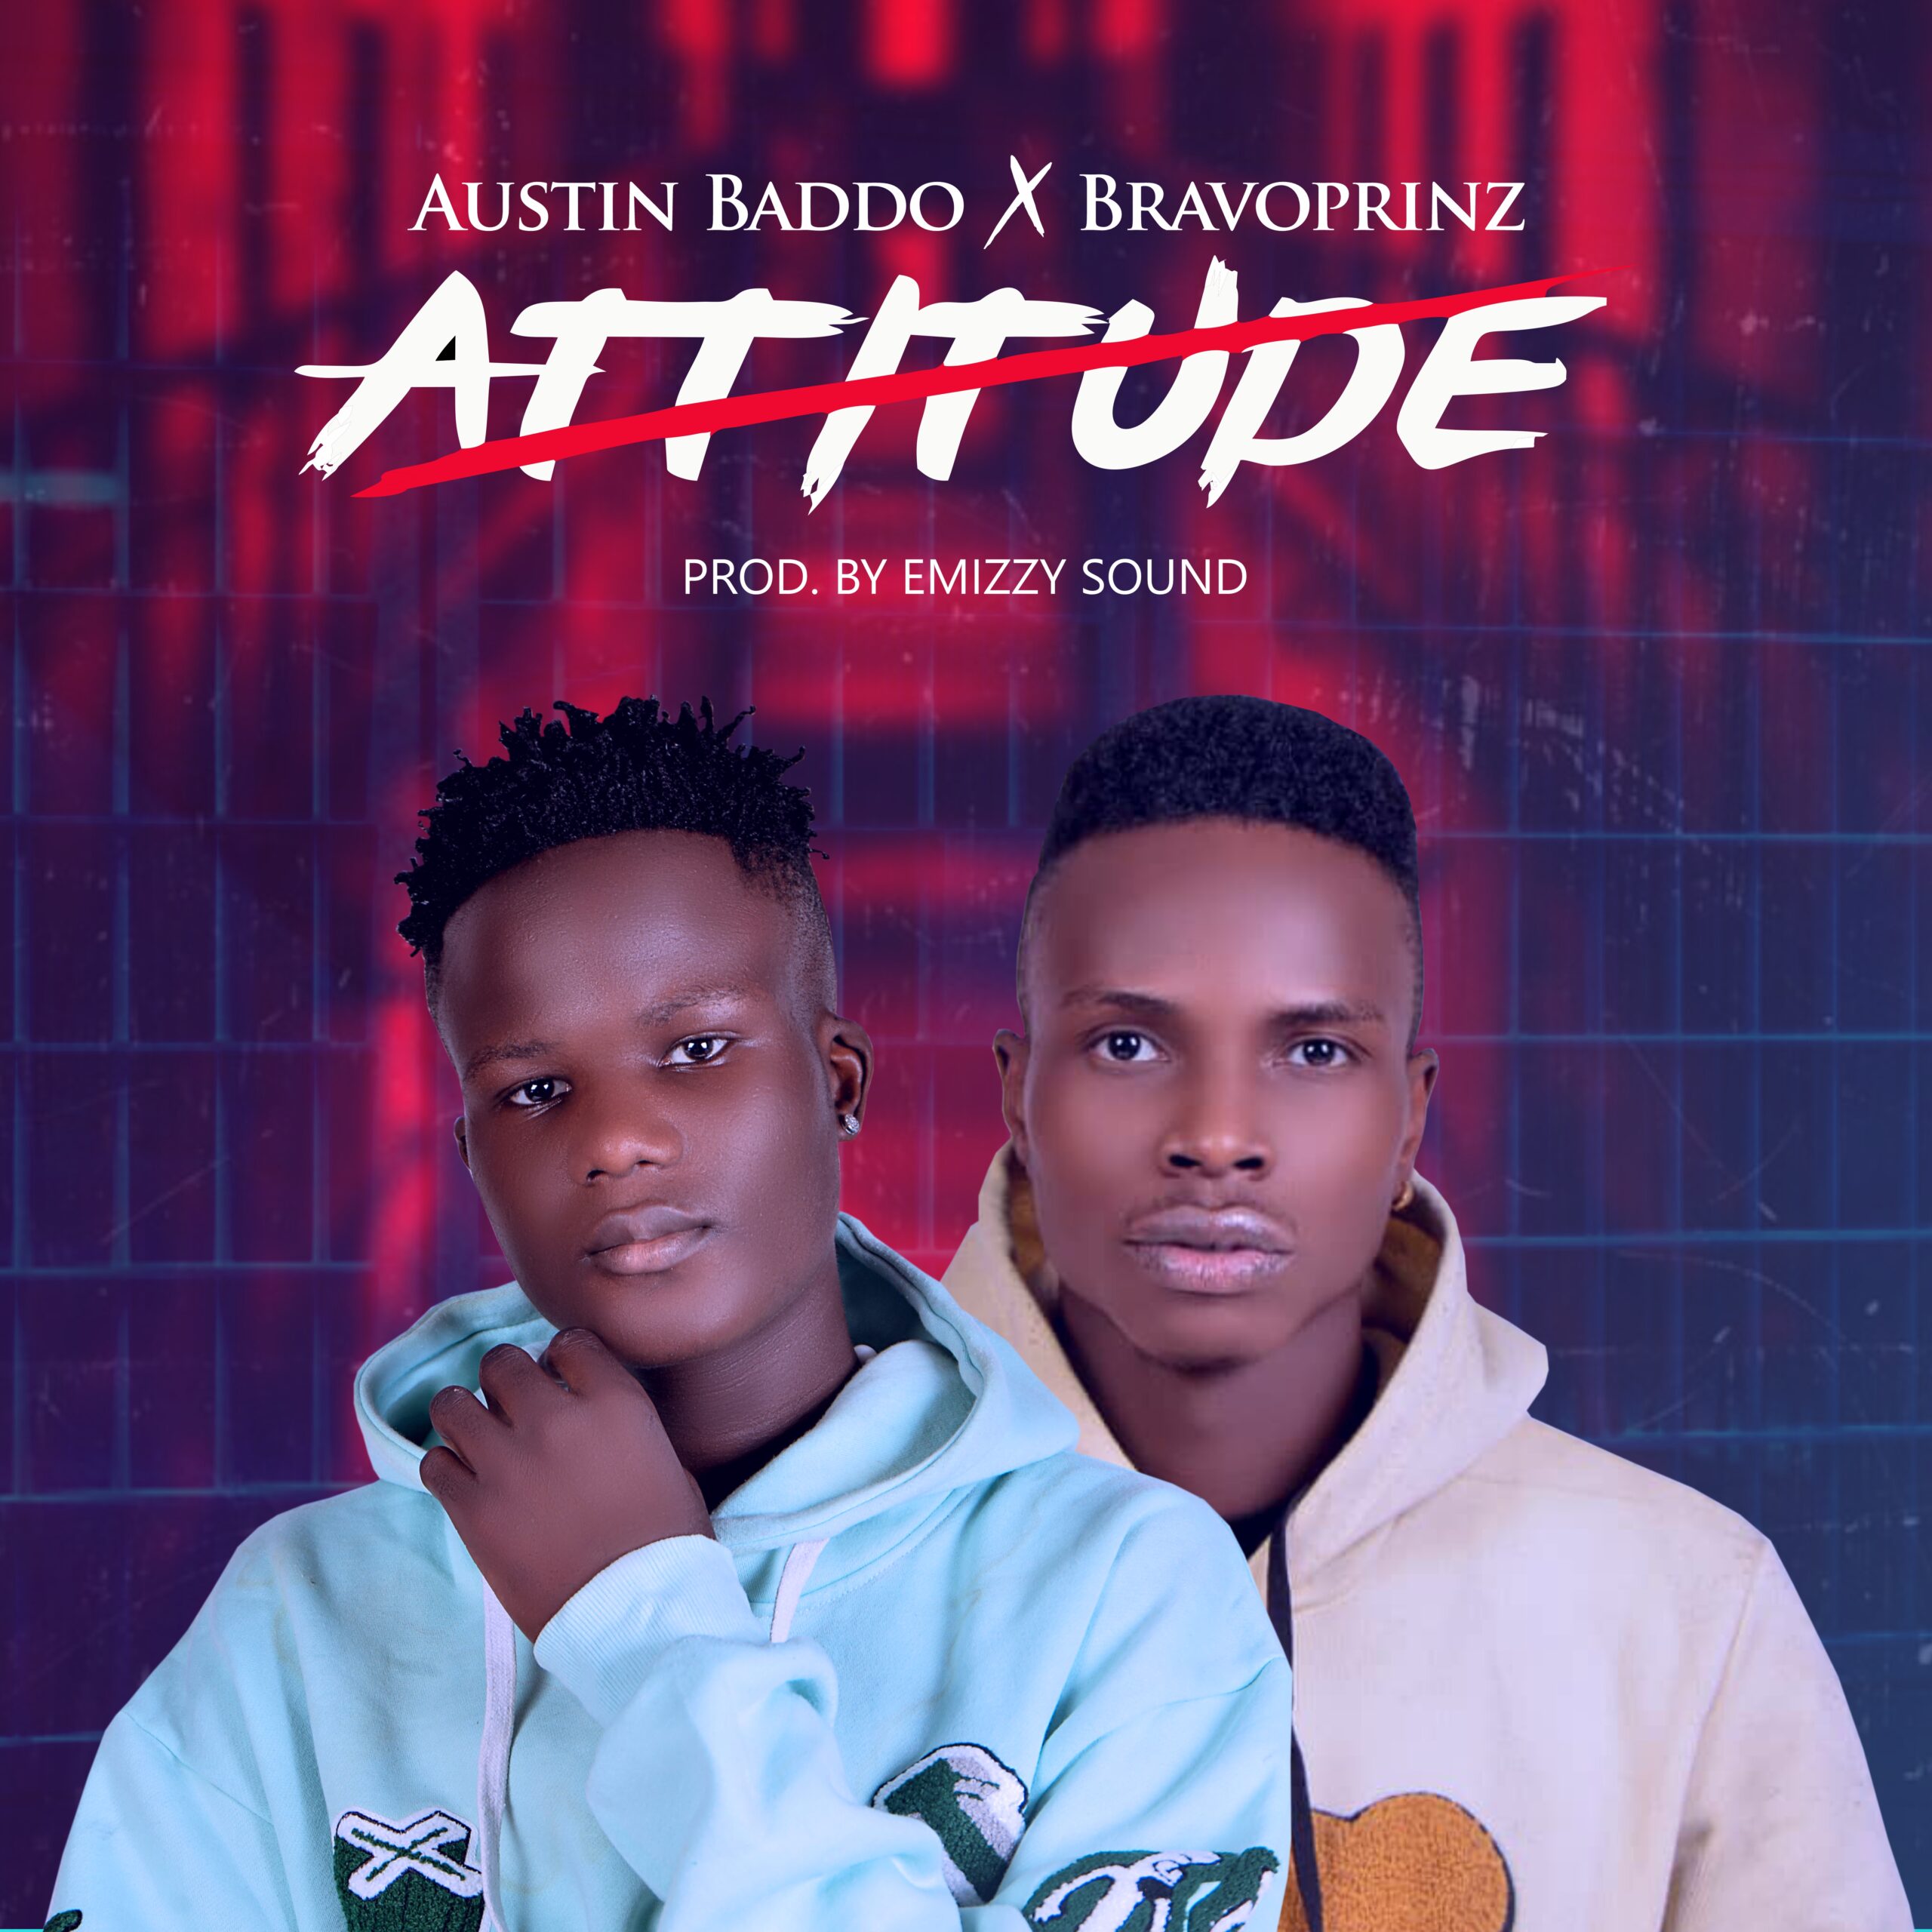 Listen & Download "ATTITUDE" by Austin Baddo Featuring Bravoprinz On Beatafrika For Free 3